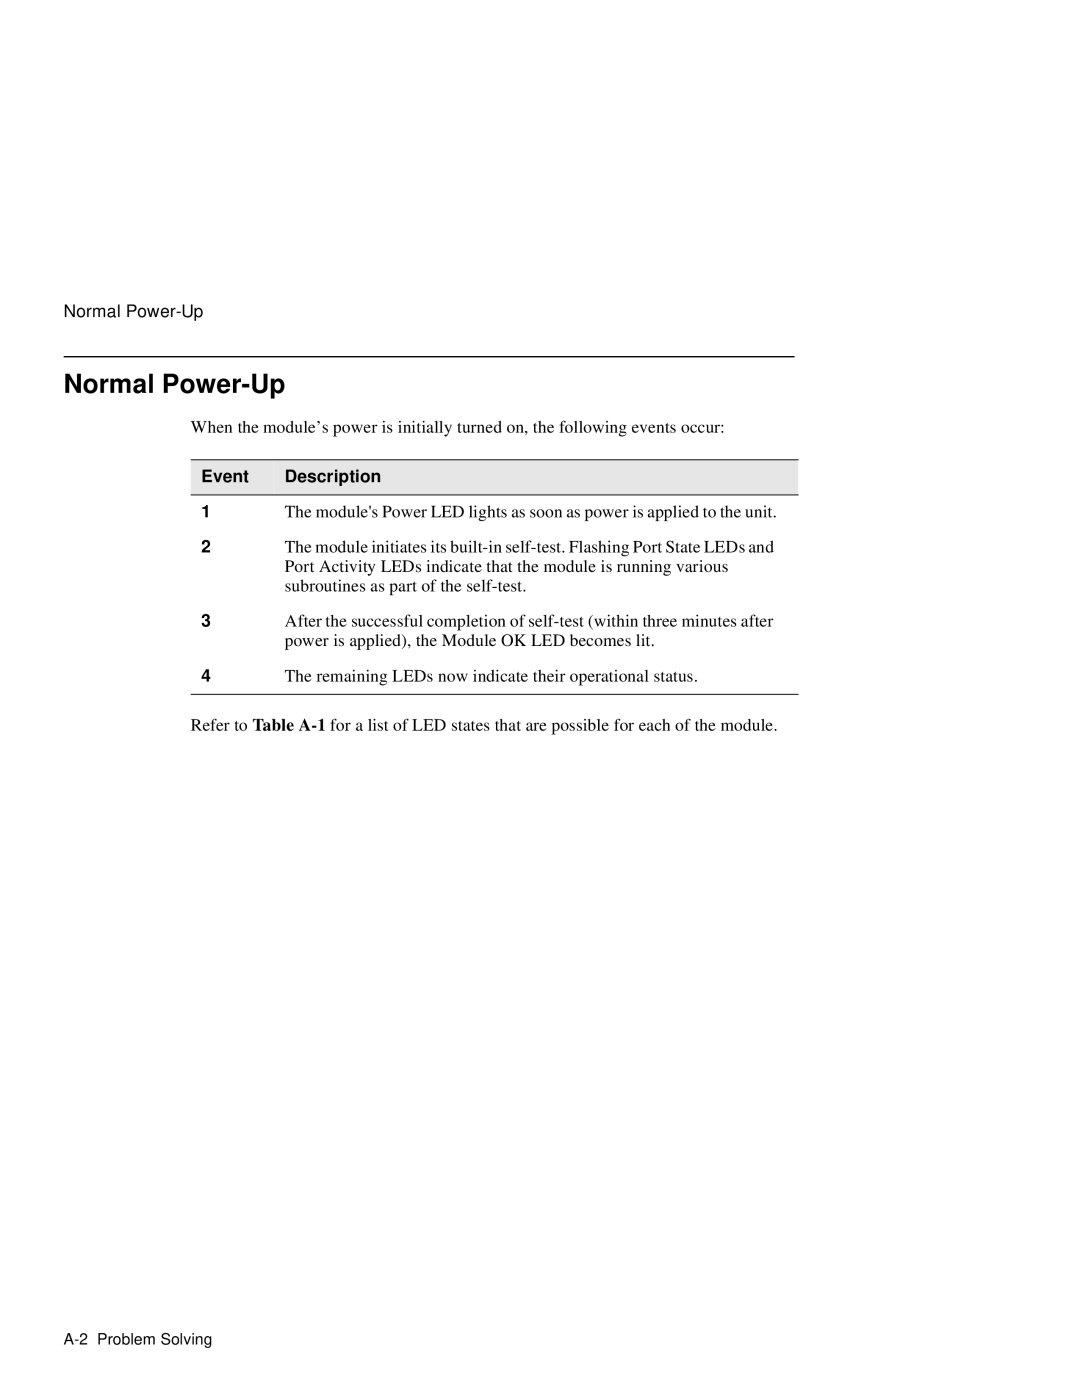 Network Technologies 900GV manual Normal Power-Up, Event Description 